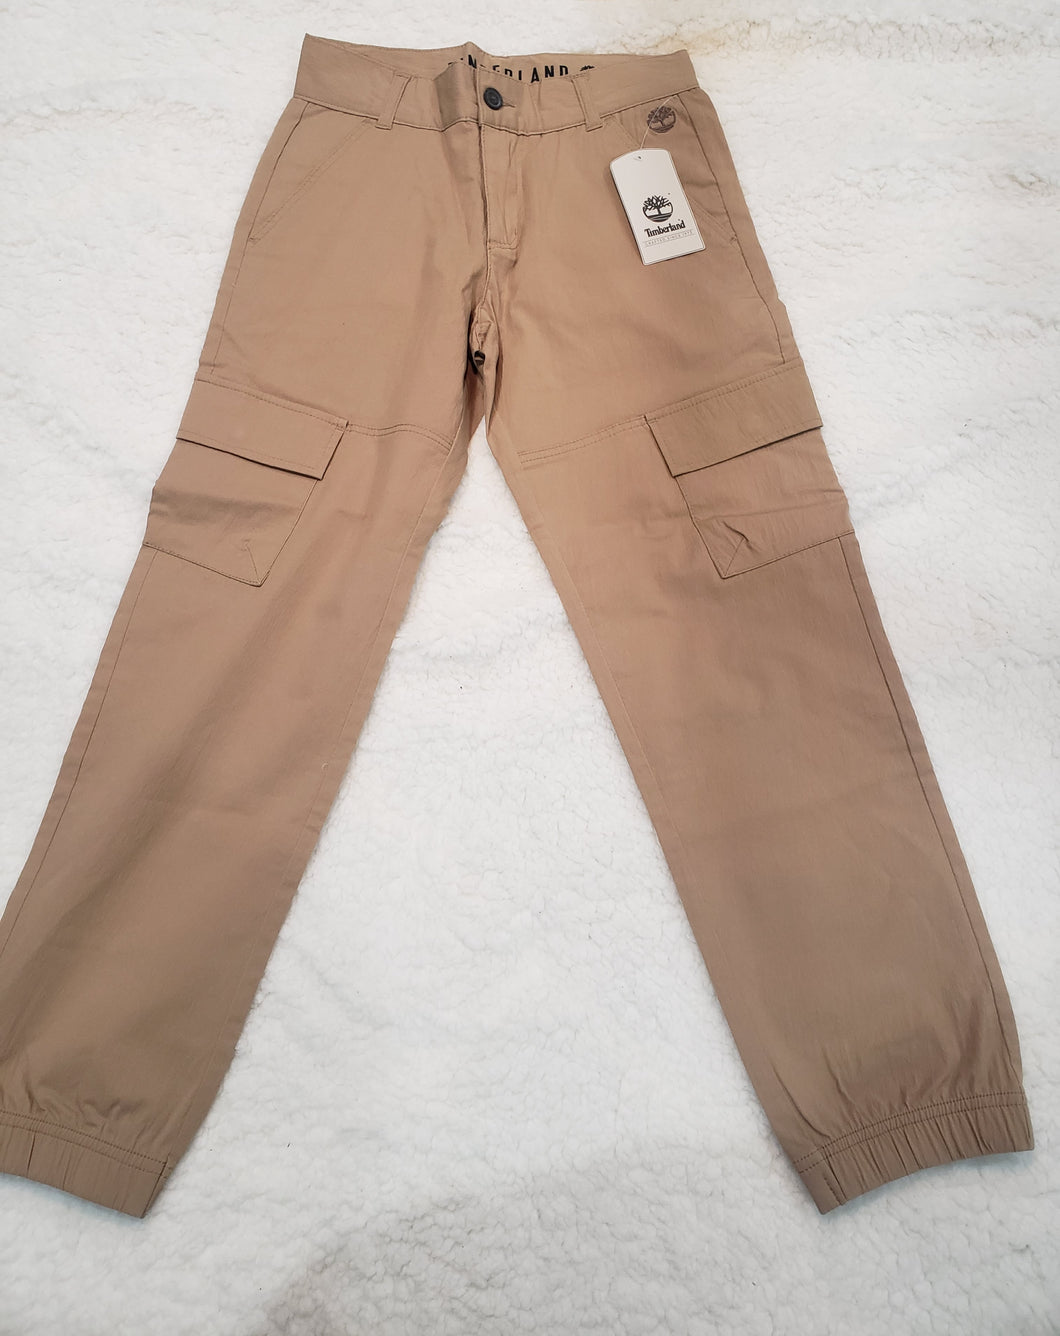 Timberland Cargo boys pants size 12